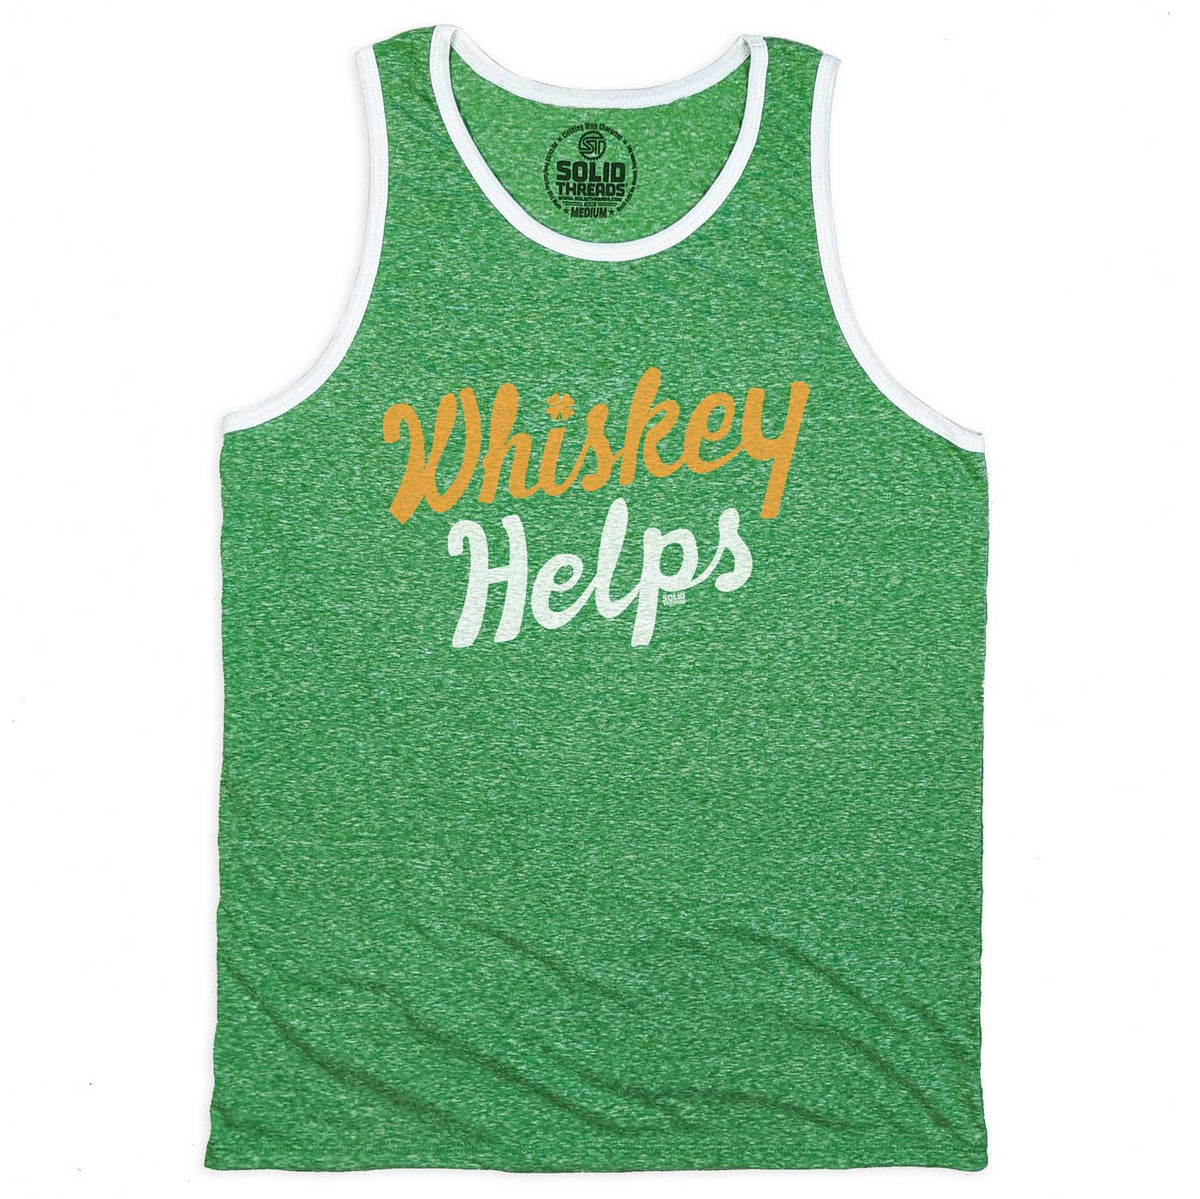 Men&#39;s Irish Whiskey Helps Vintage Graphic Tank Top | Funny Irish T-shirt | Solid Threads